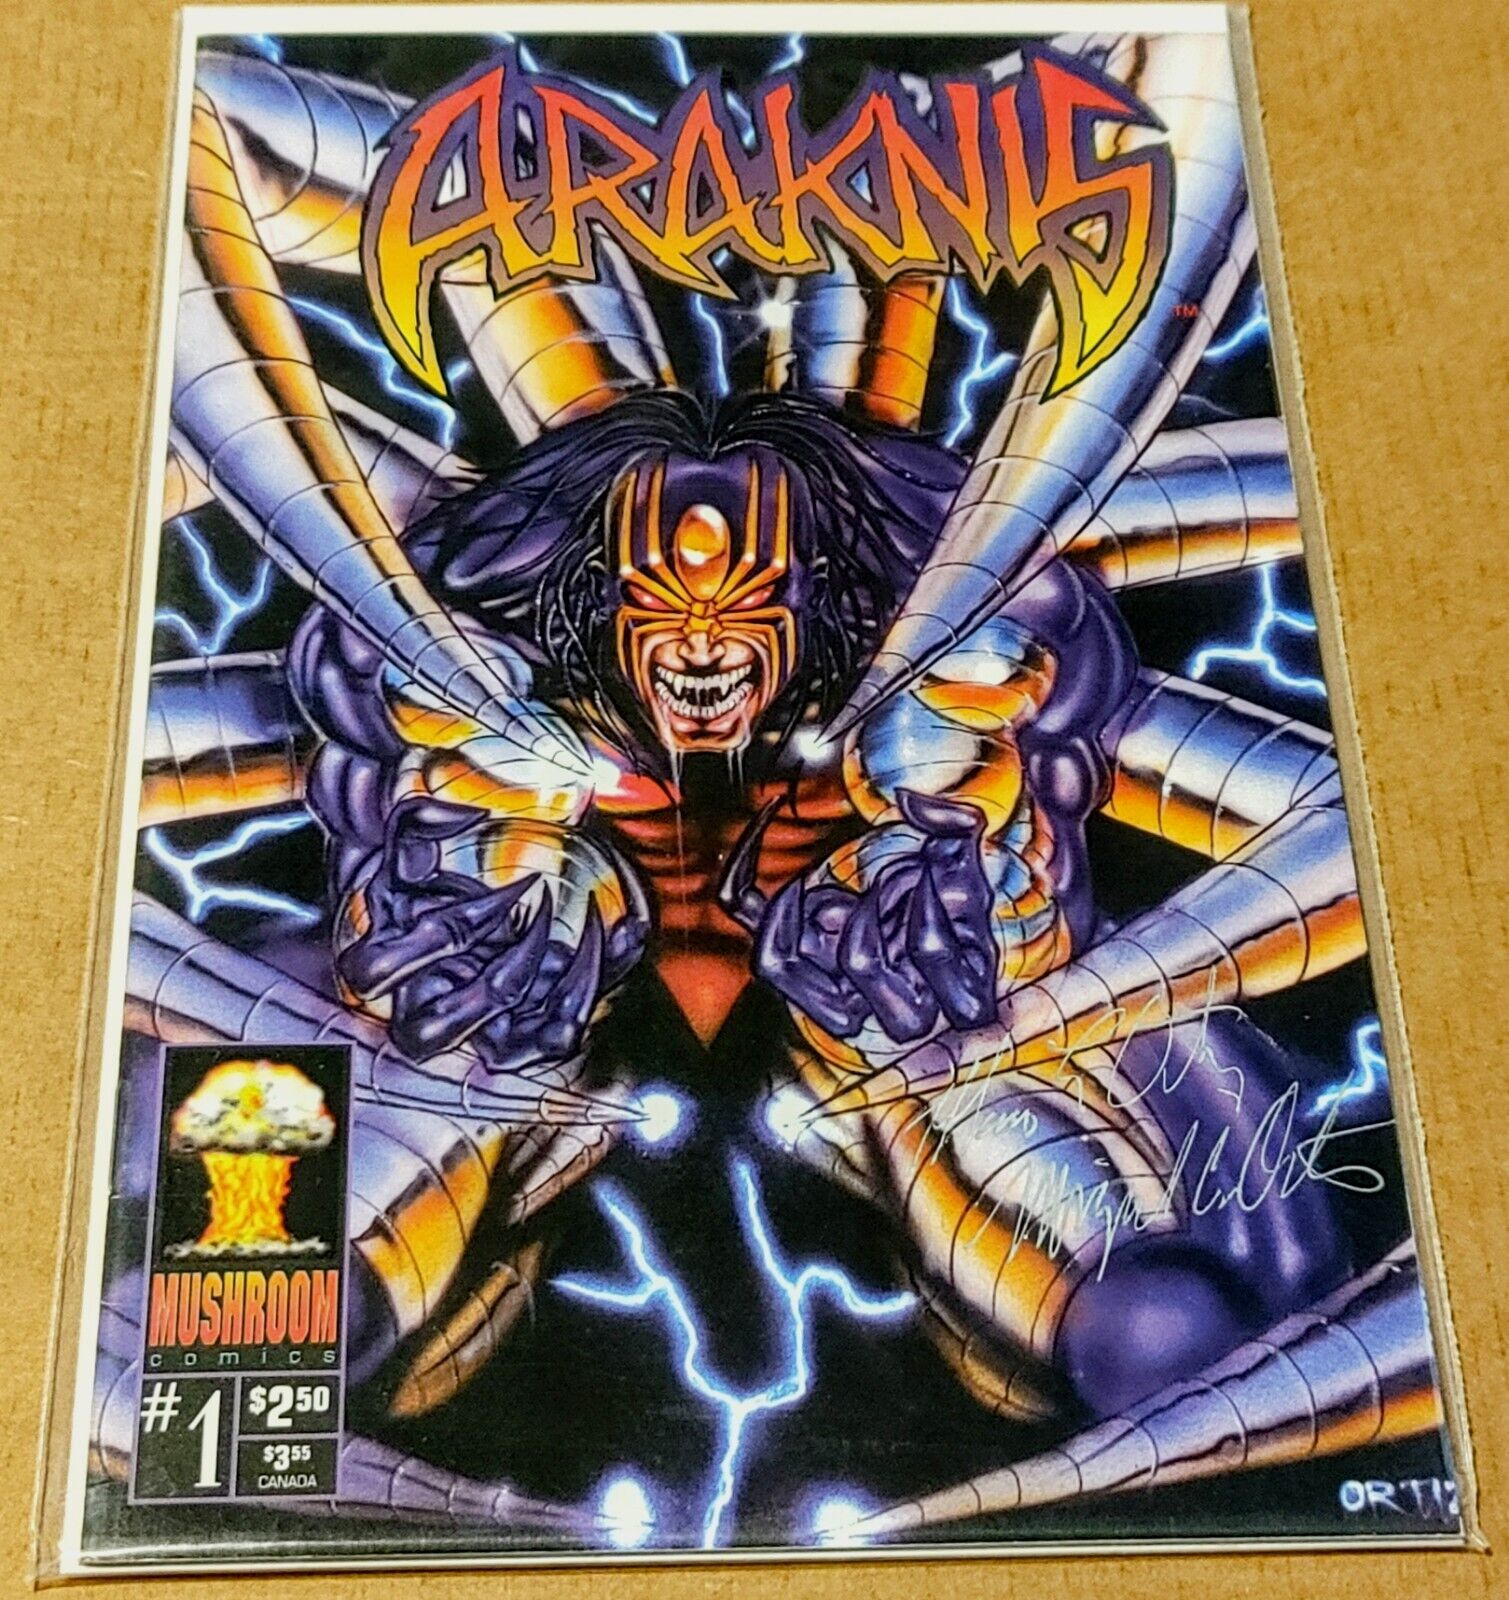 Araknis #1 Signed by Mario & Michael Ortiz - Mushroom Comics 1995 VF+